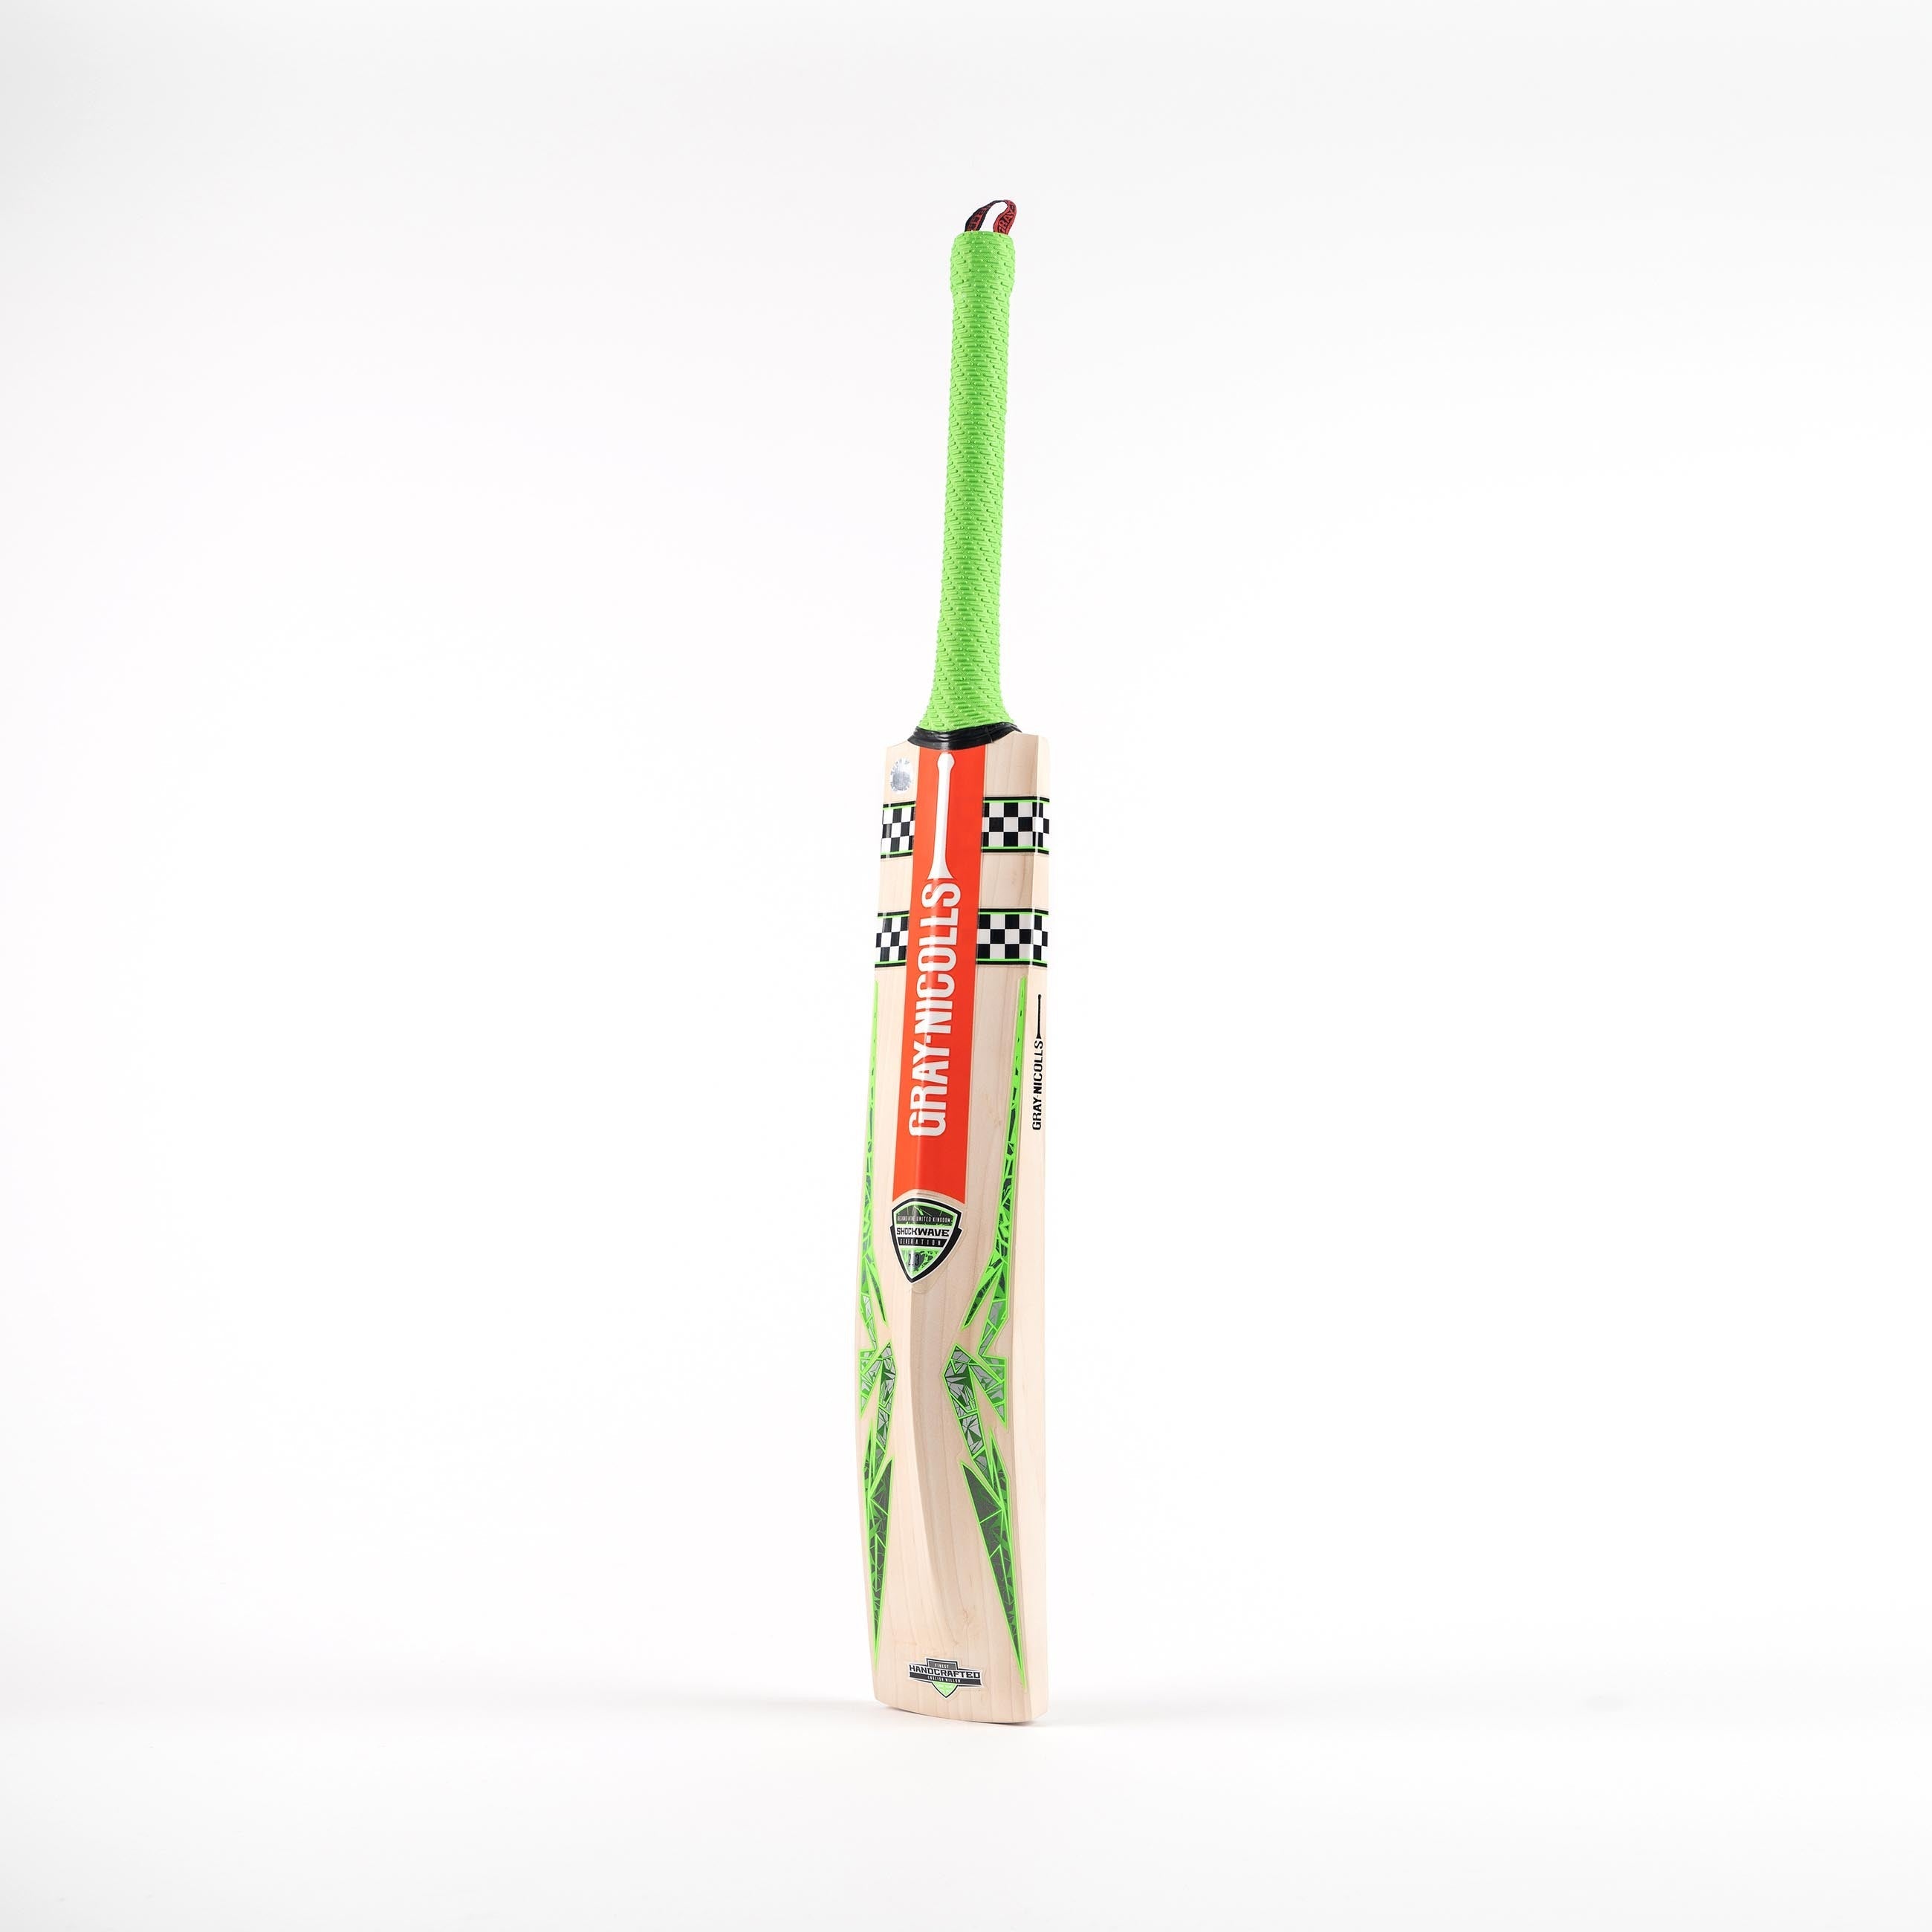 Top 10 Best Cricket Bats English Willow